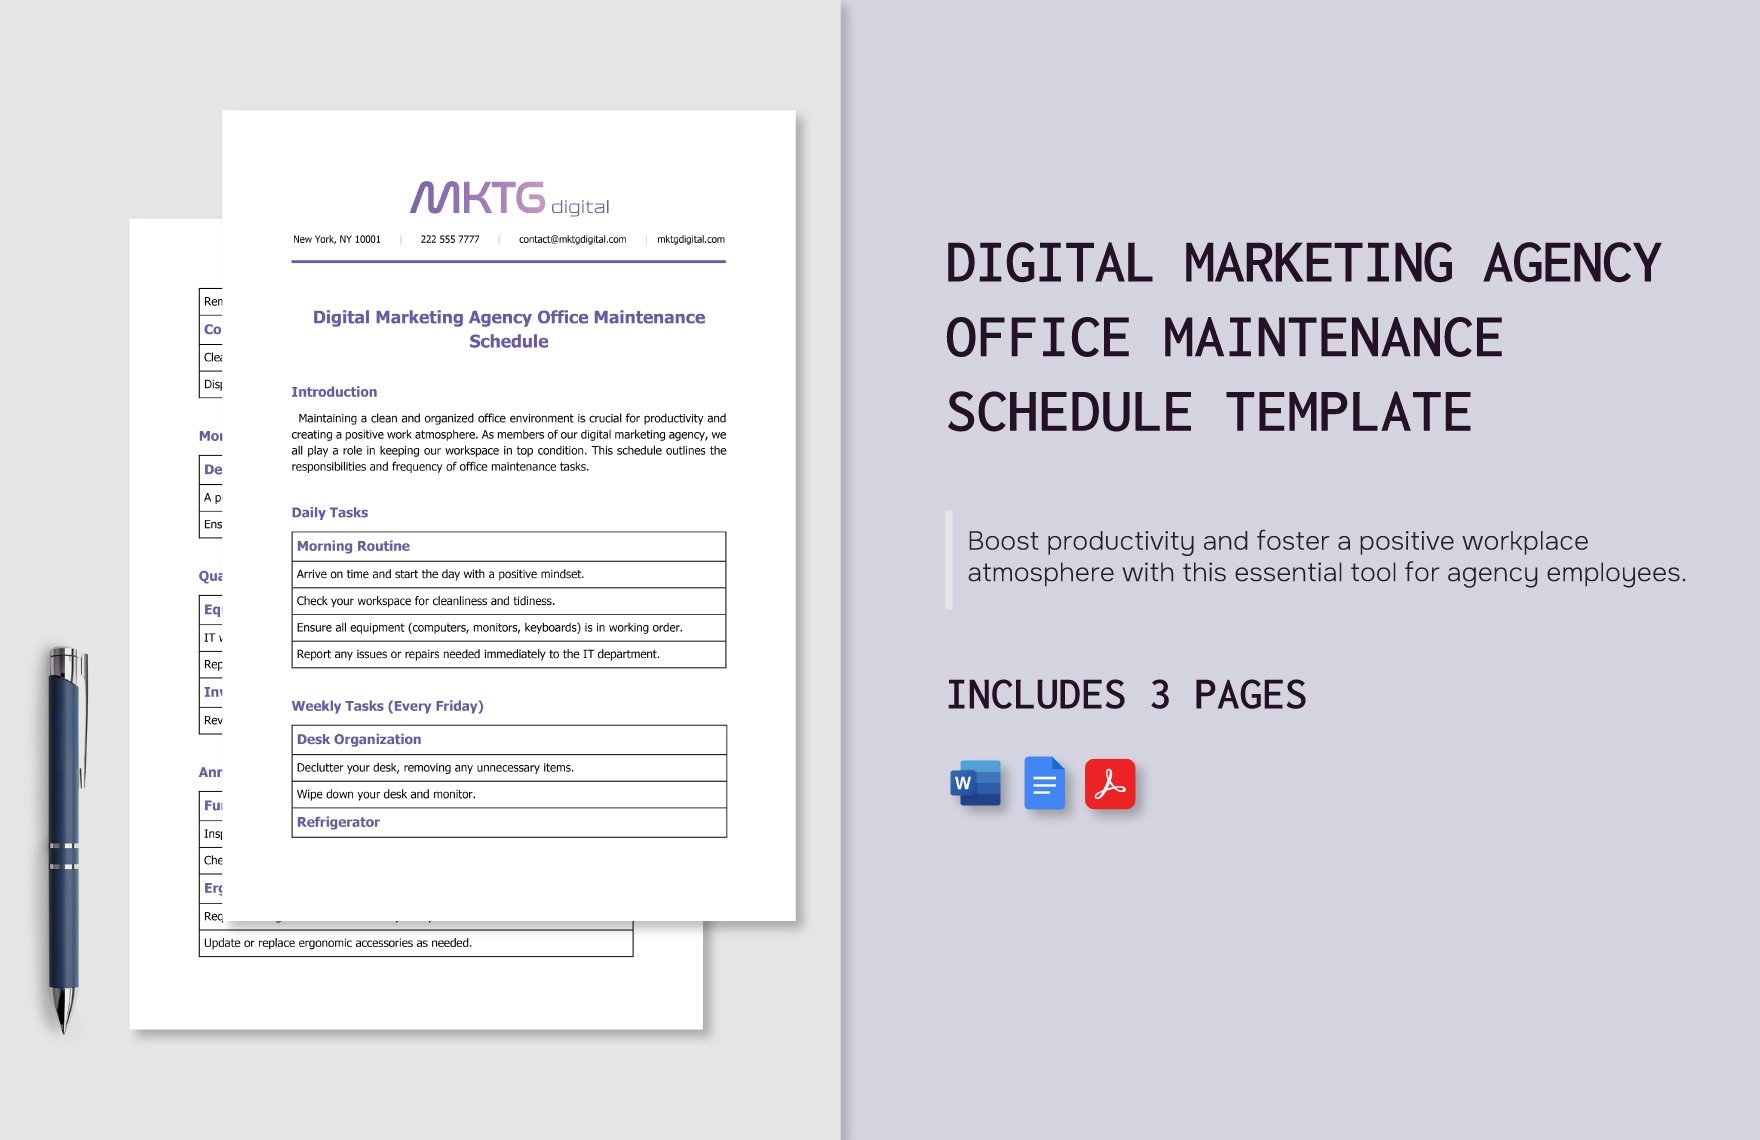 Digital Marketing Agency Office Maintenance Schedule Template